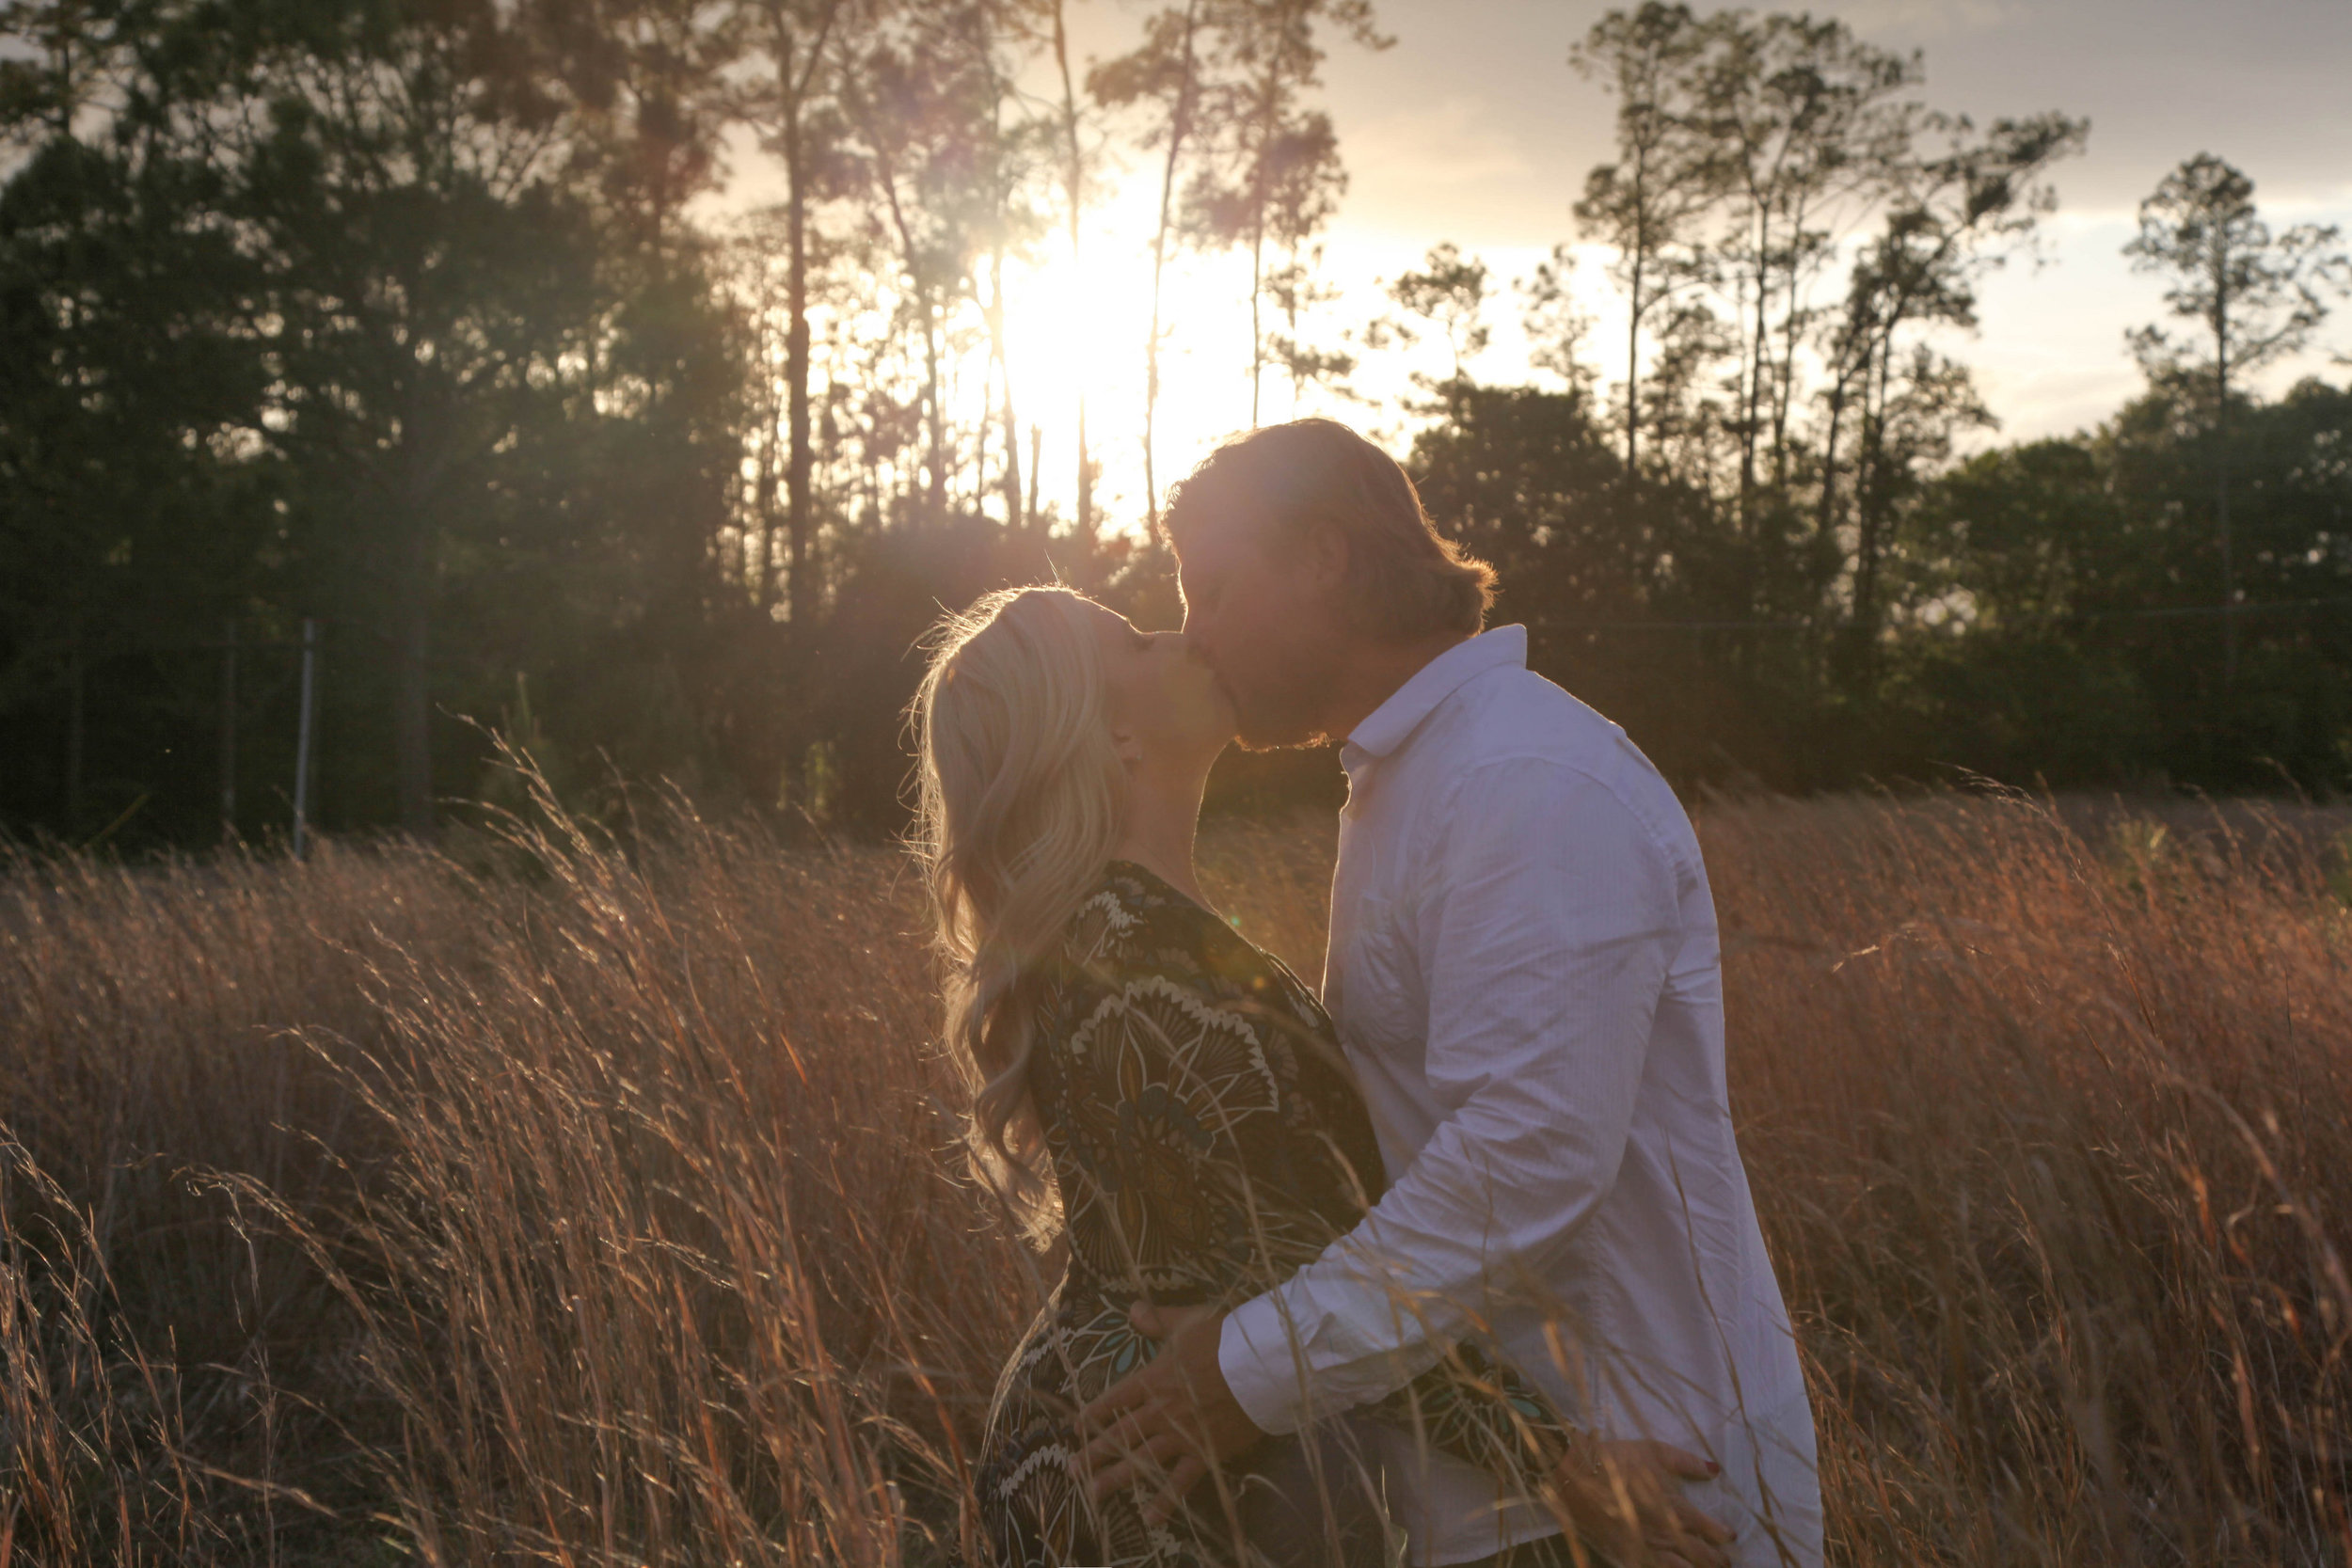 Orlando Open Field Engagement Photos -- Wedding Blog - The Overwhelmed Bride